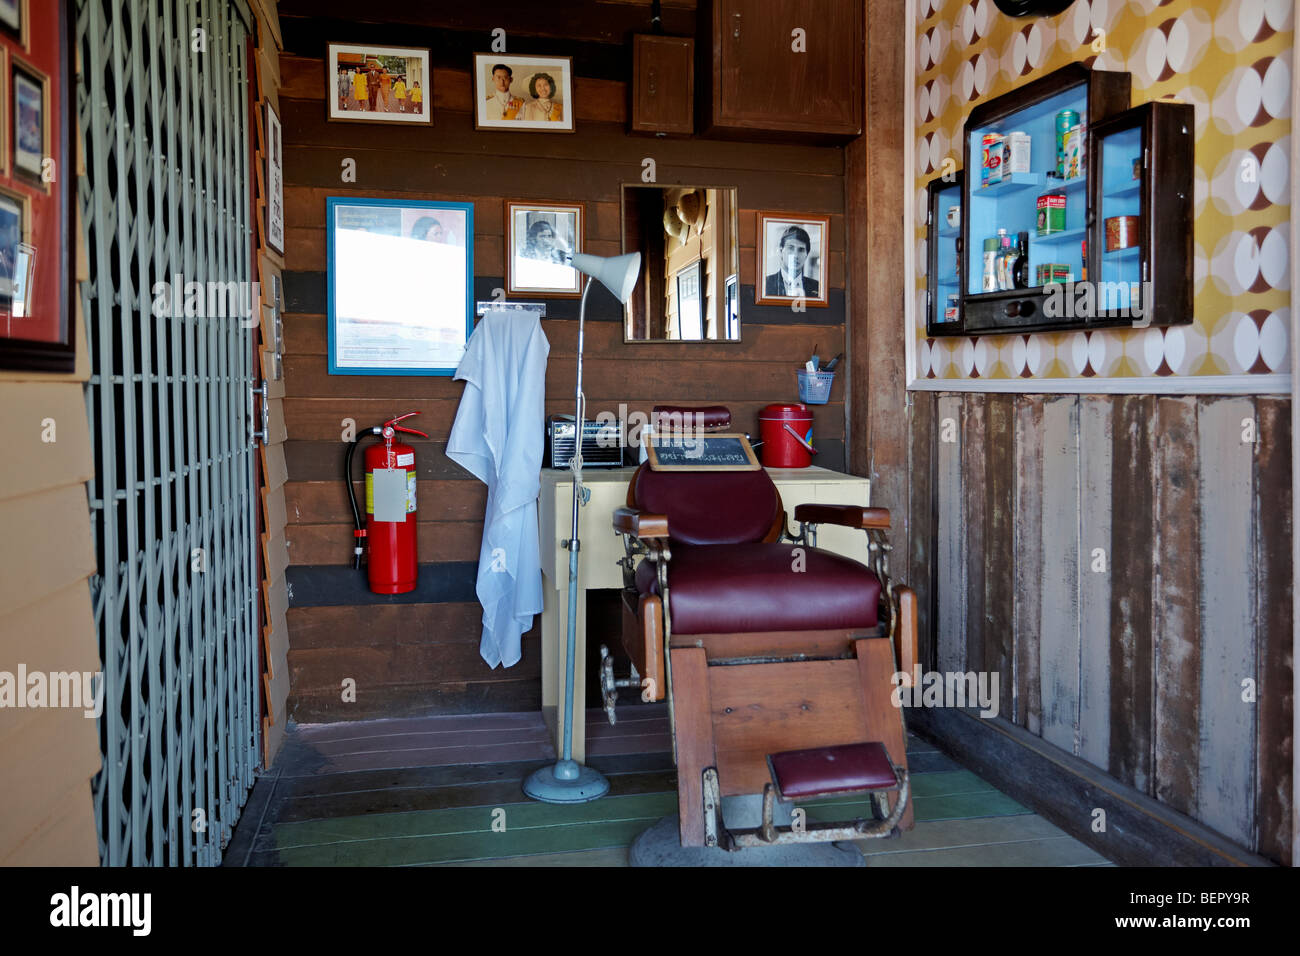 Vintage barber shop. Old wooden-clad barber shop museum exhibit. Hua Hin, Thailand, S. E. Asia Stock Photo